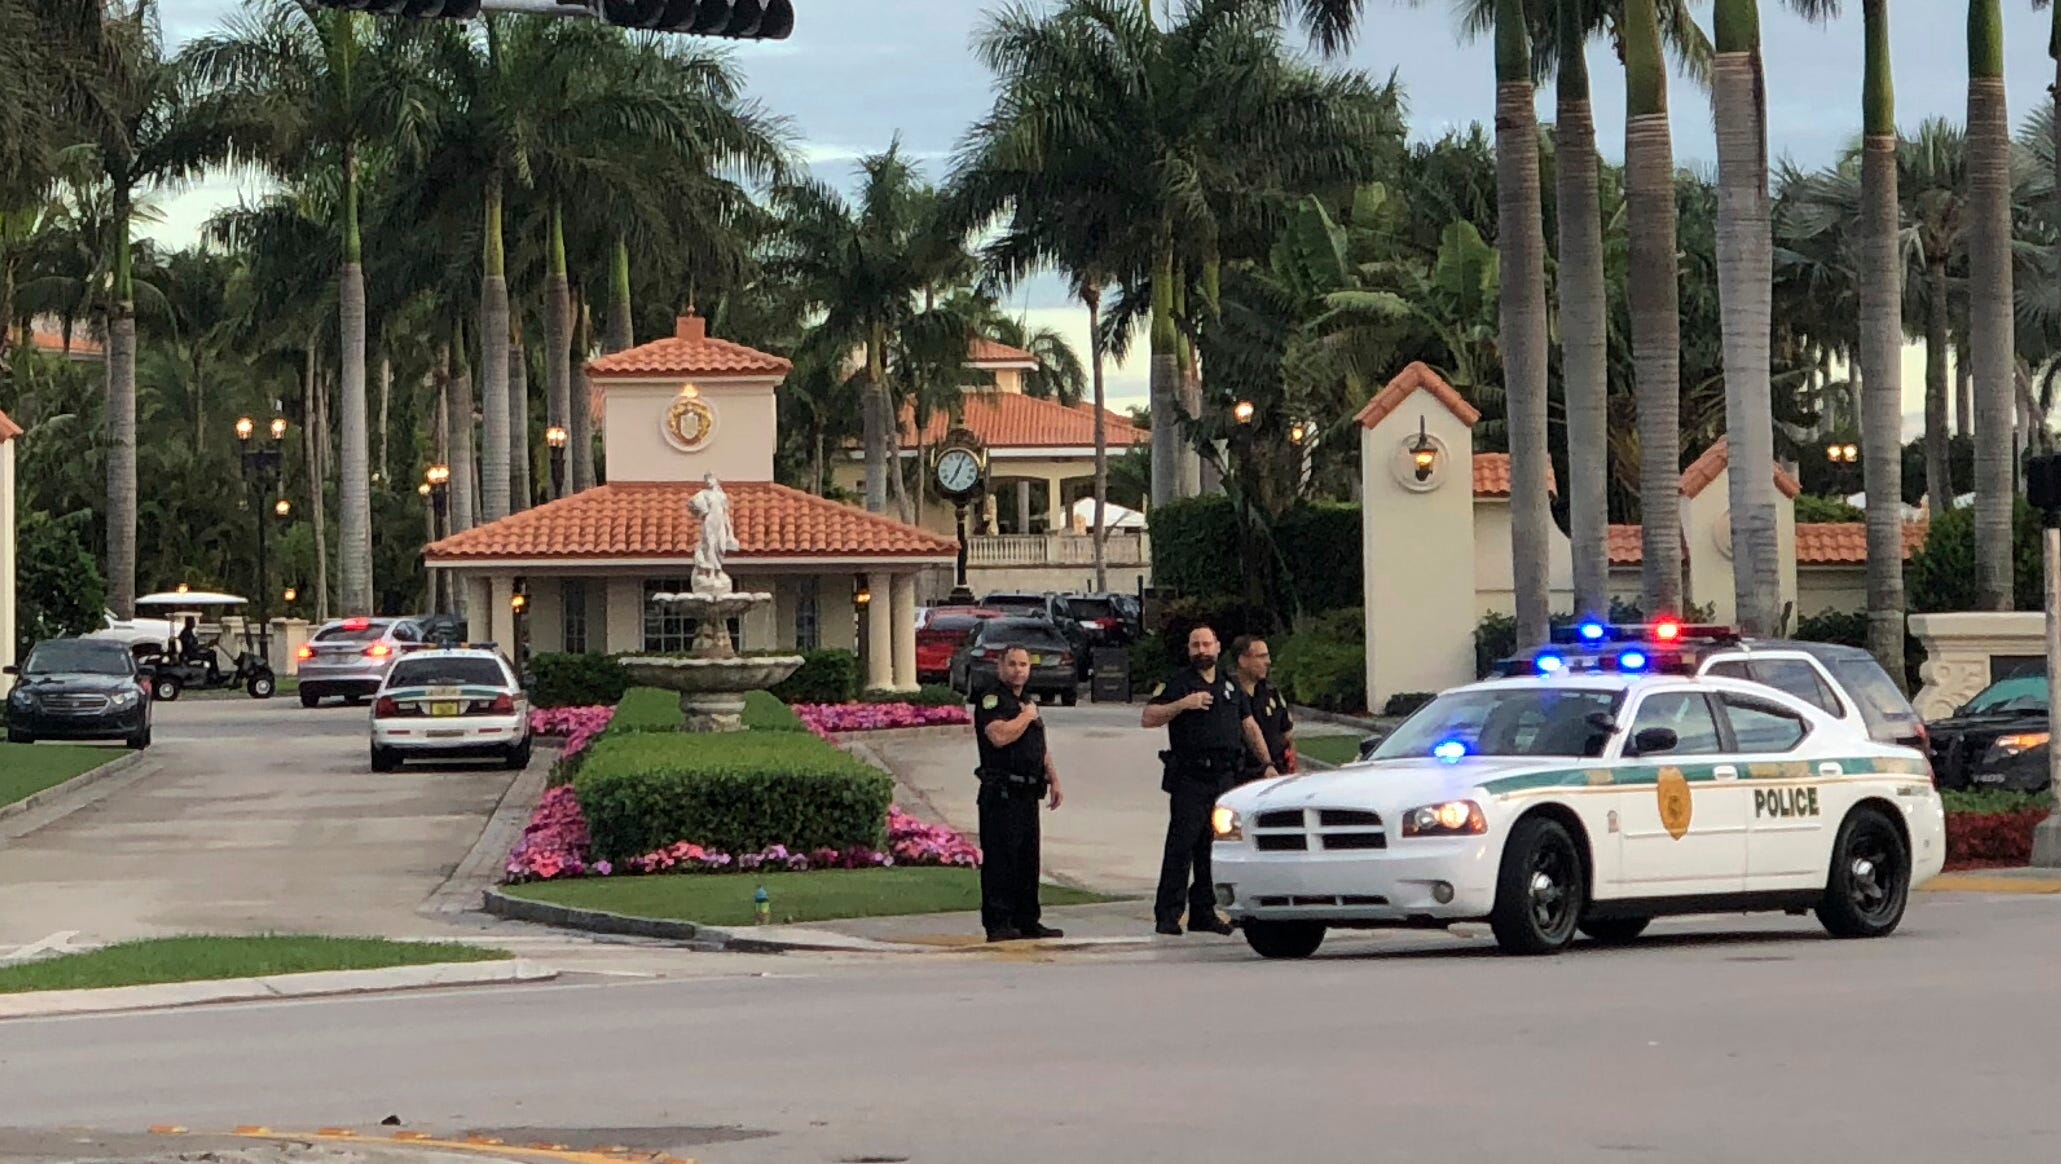 Miami police: Gunman lured officers into ambush shootout at Trump's golf club